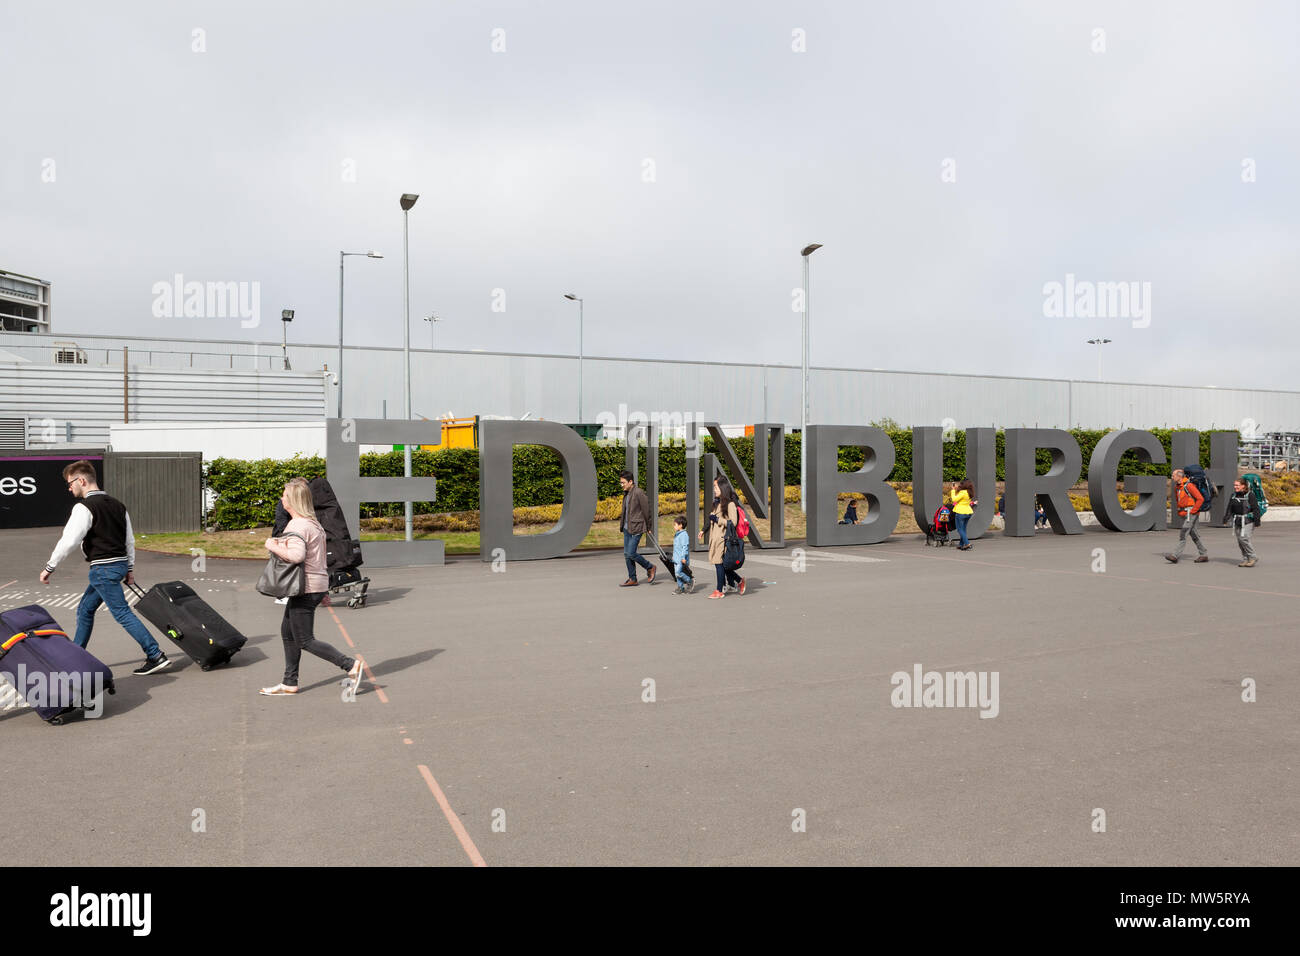 Large Edinburgh lettering sign outside Edinburgh airport, Scotland, UK Stock Photo